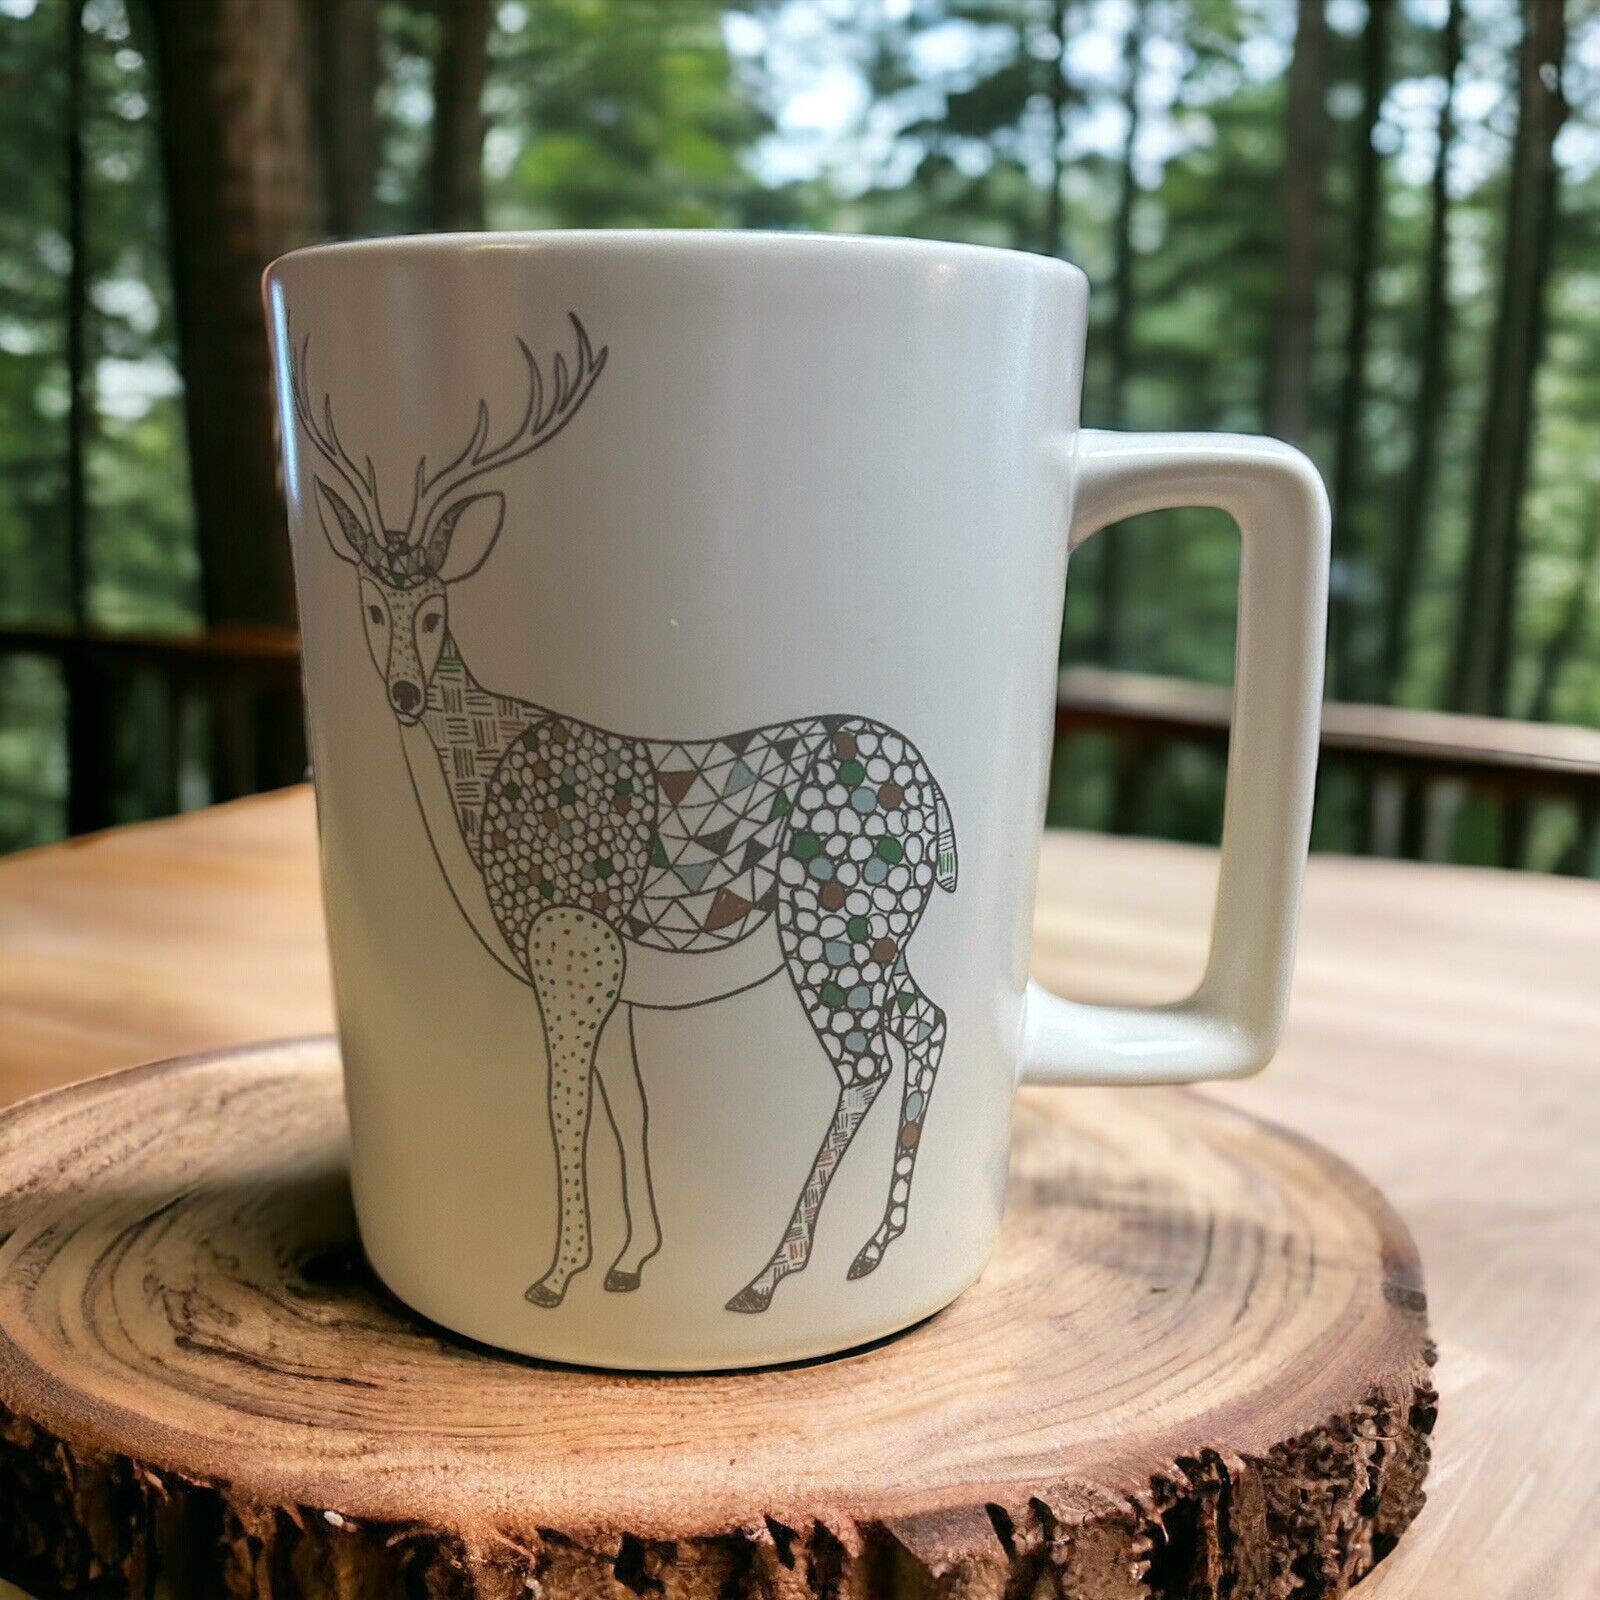 Starbucks Mosaic Festive Deer Cup/mug  12fl. oz. 2017